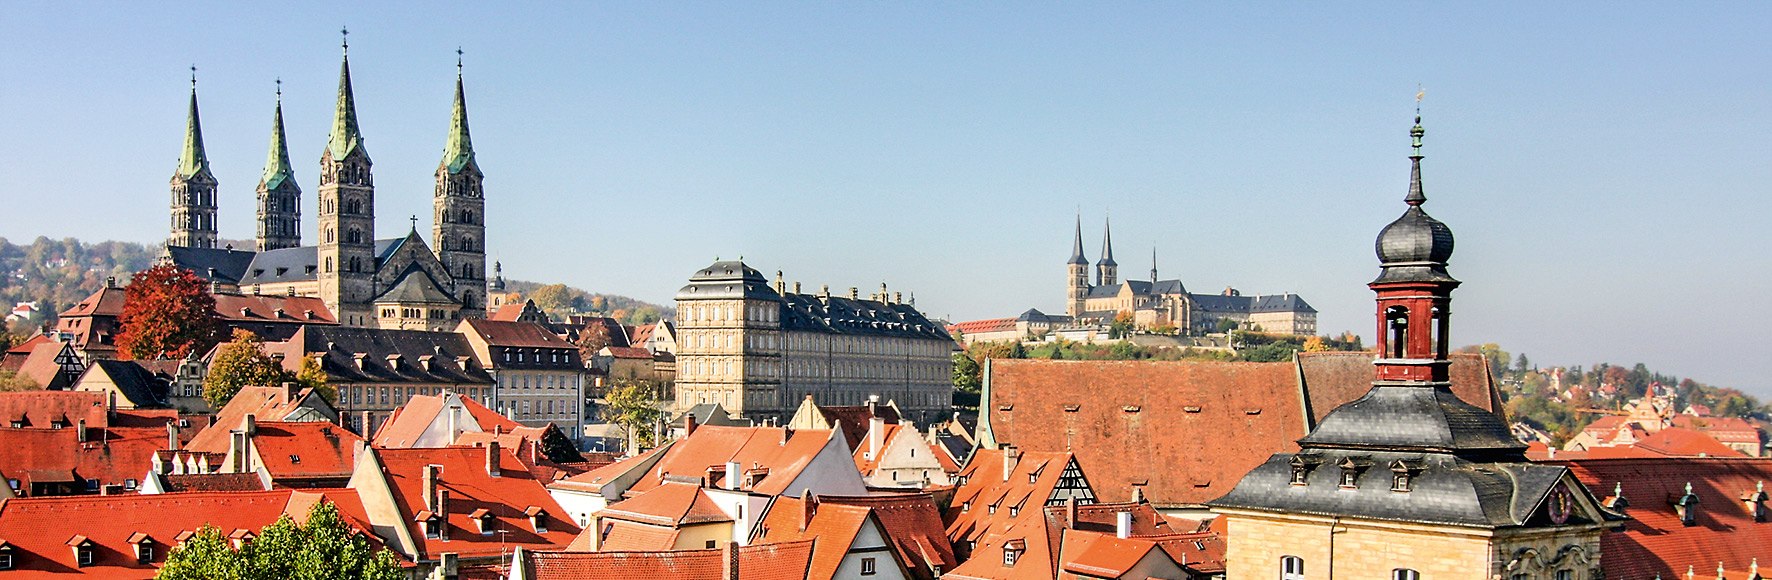 Stadt Bamberg, © ©Frank Krautschick_Fotolia.com